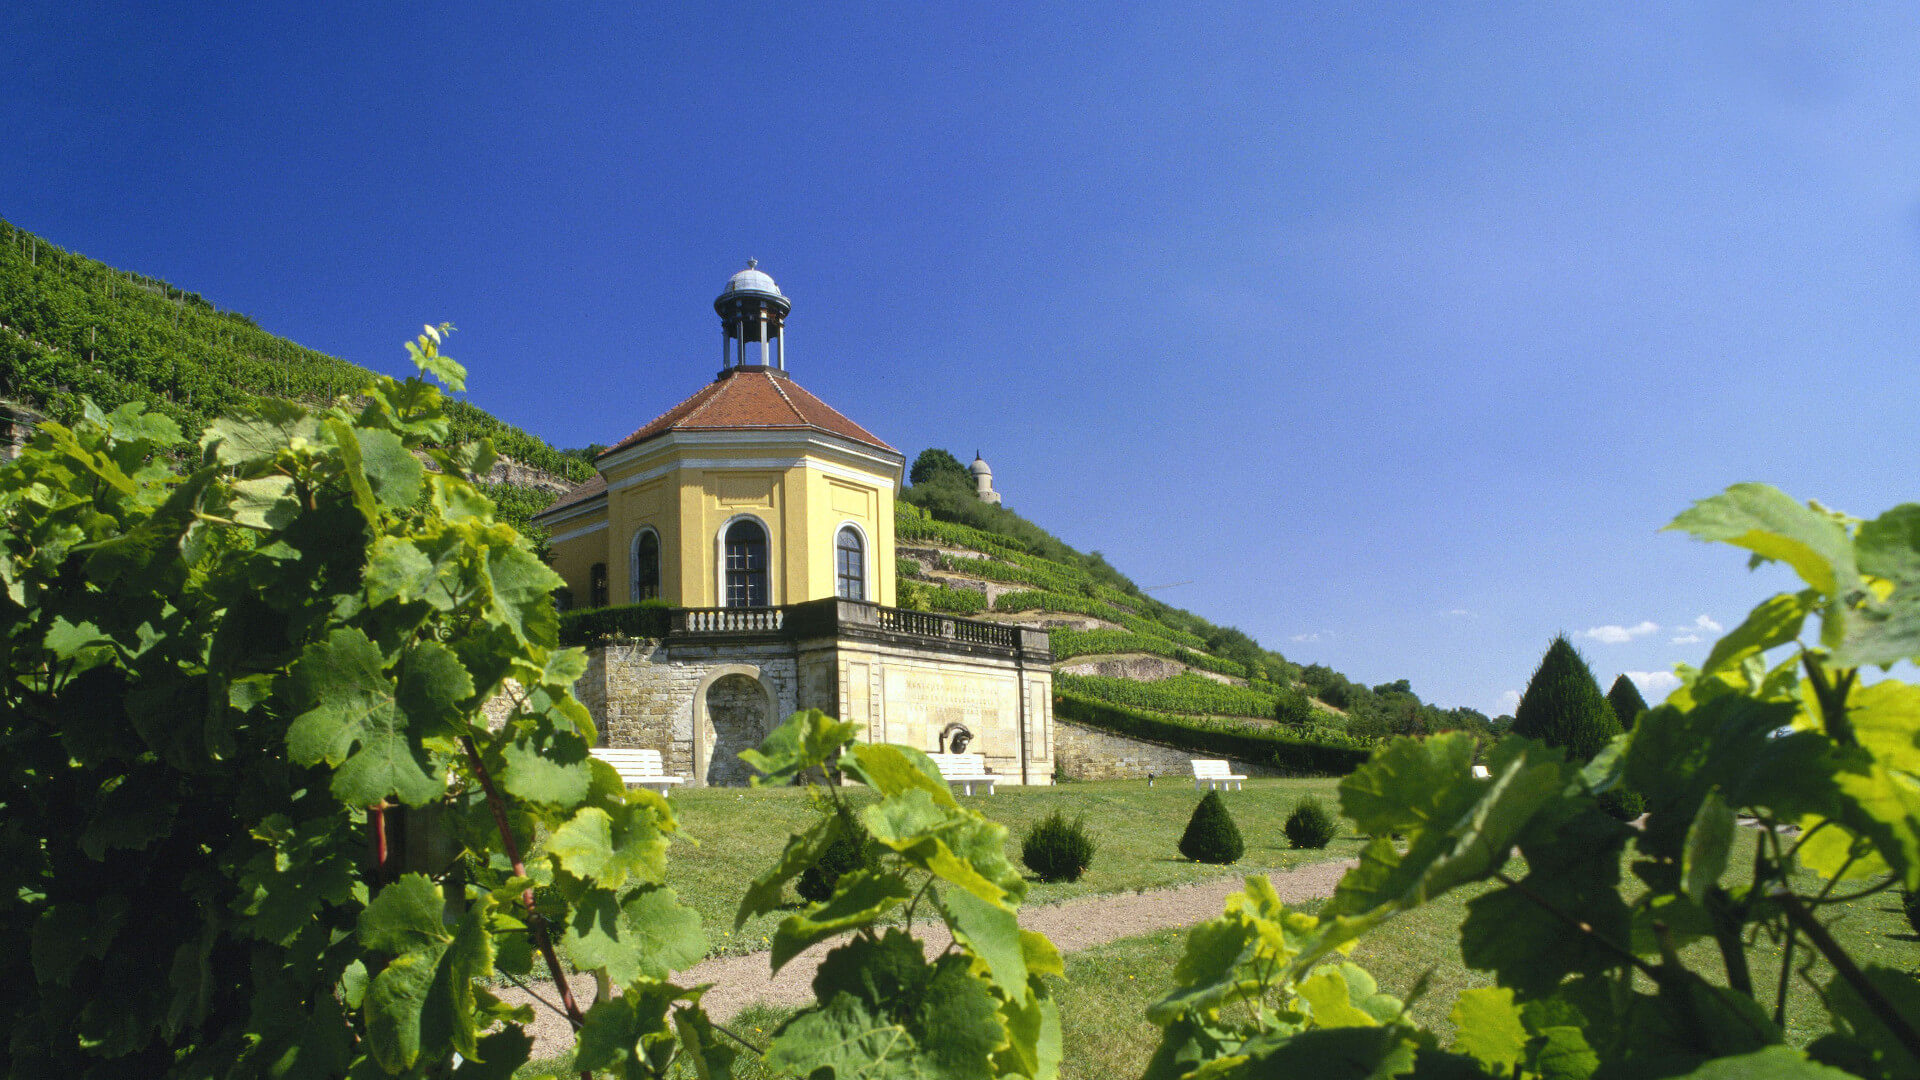 Radebeul: The wine-growing area Saxony